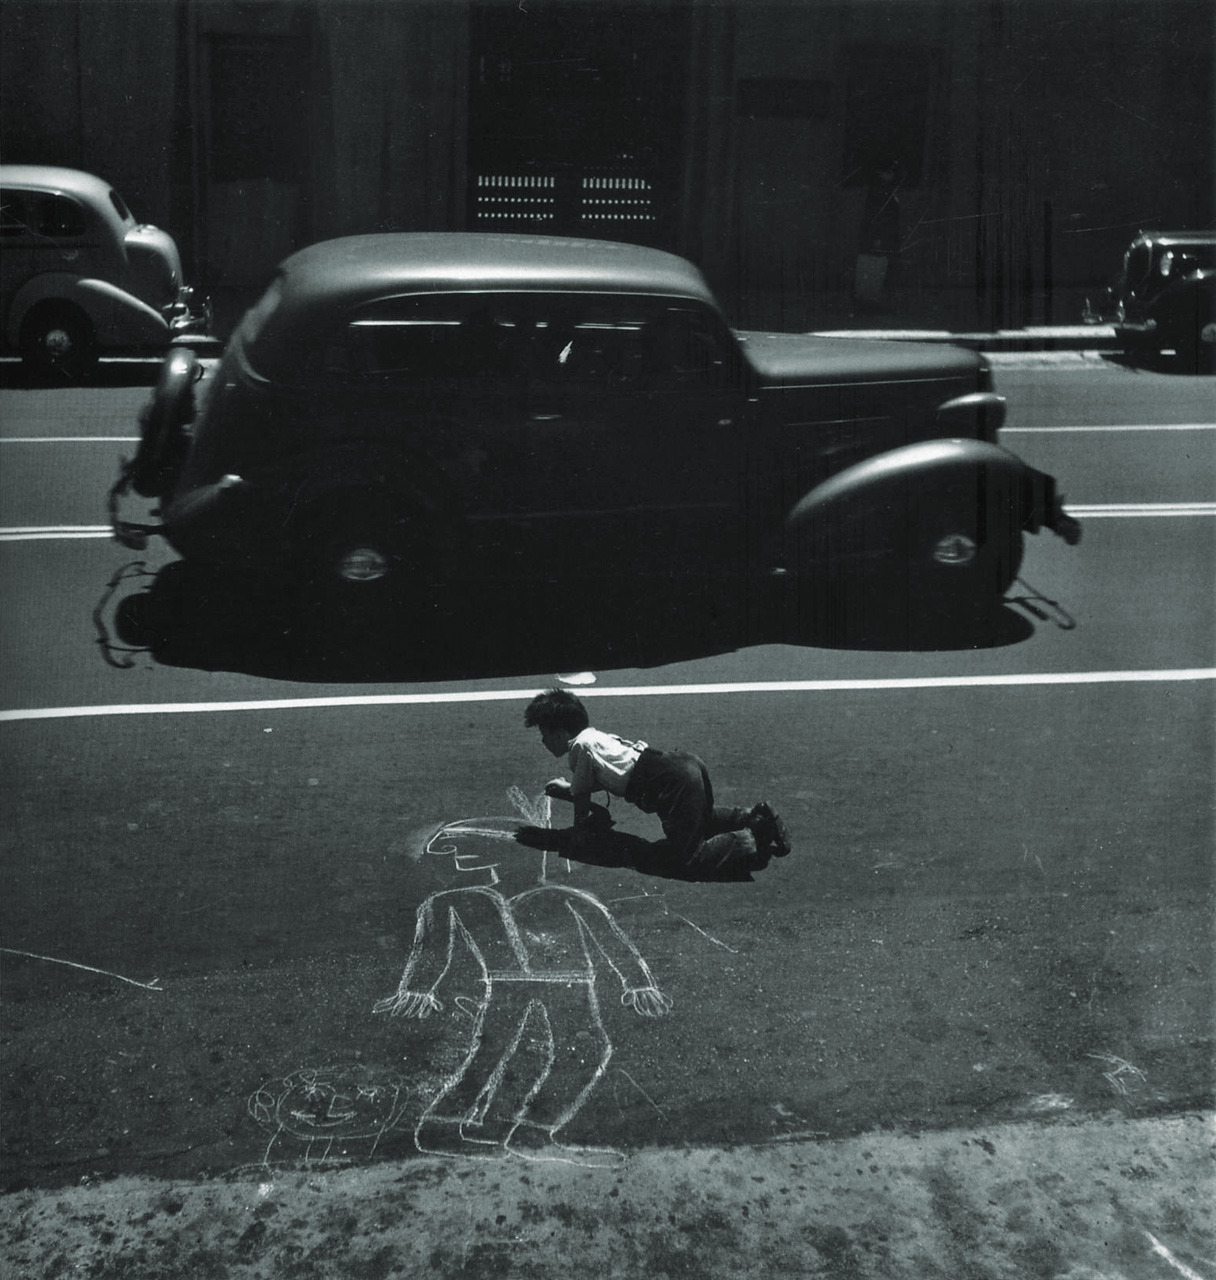 John Gutmann
The Artist Lives Dangerously: San Francisco, 1938
Thanks to melisaki